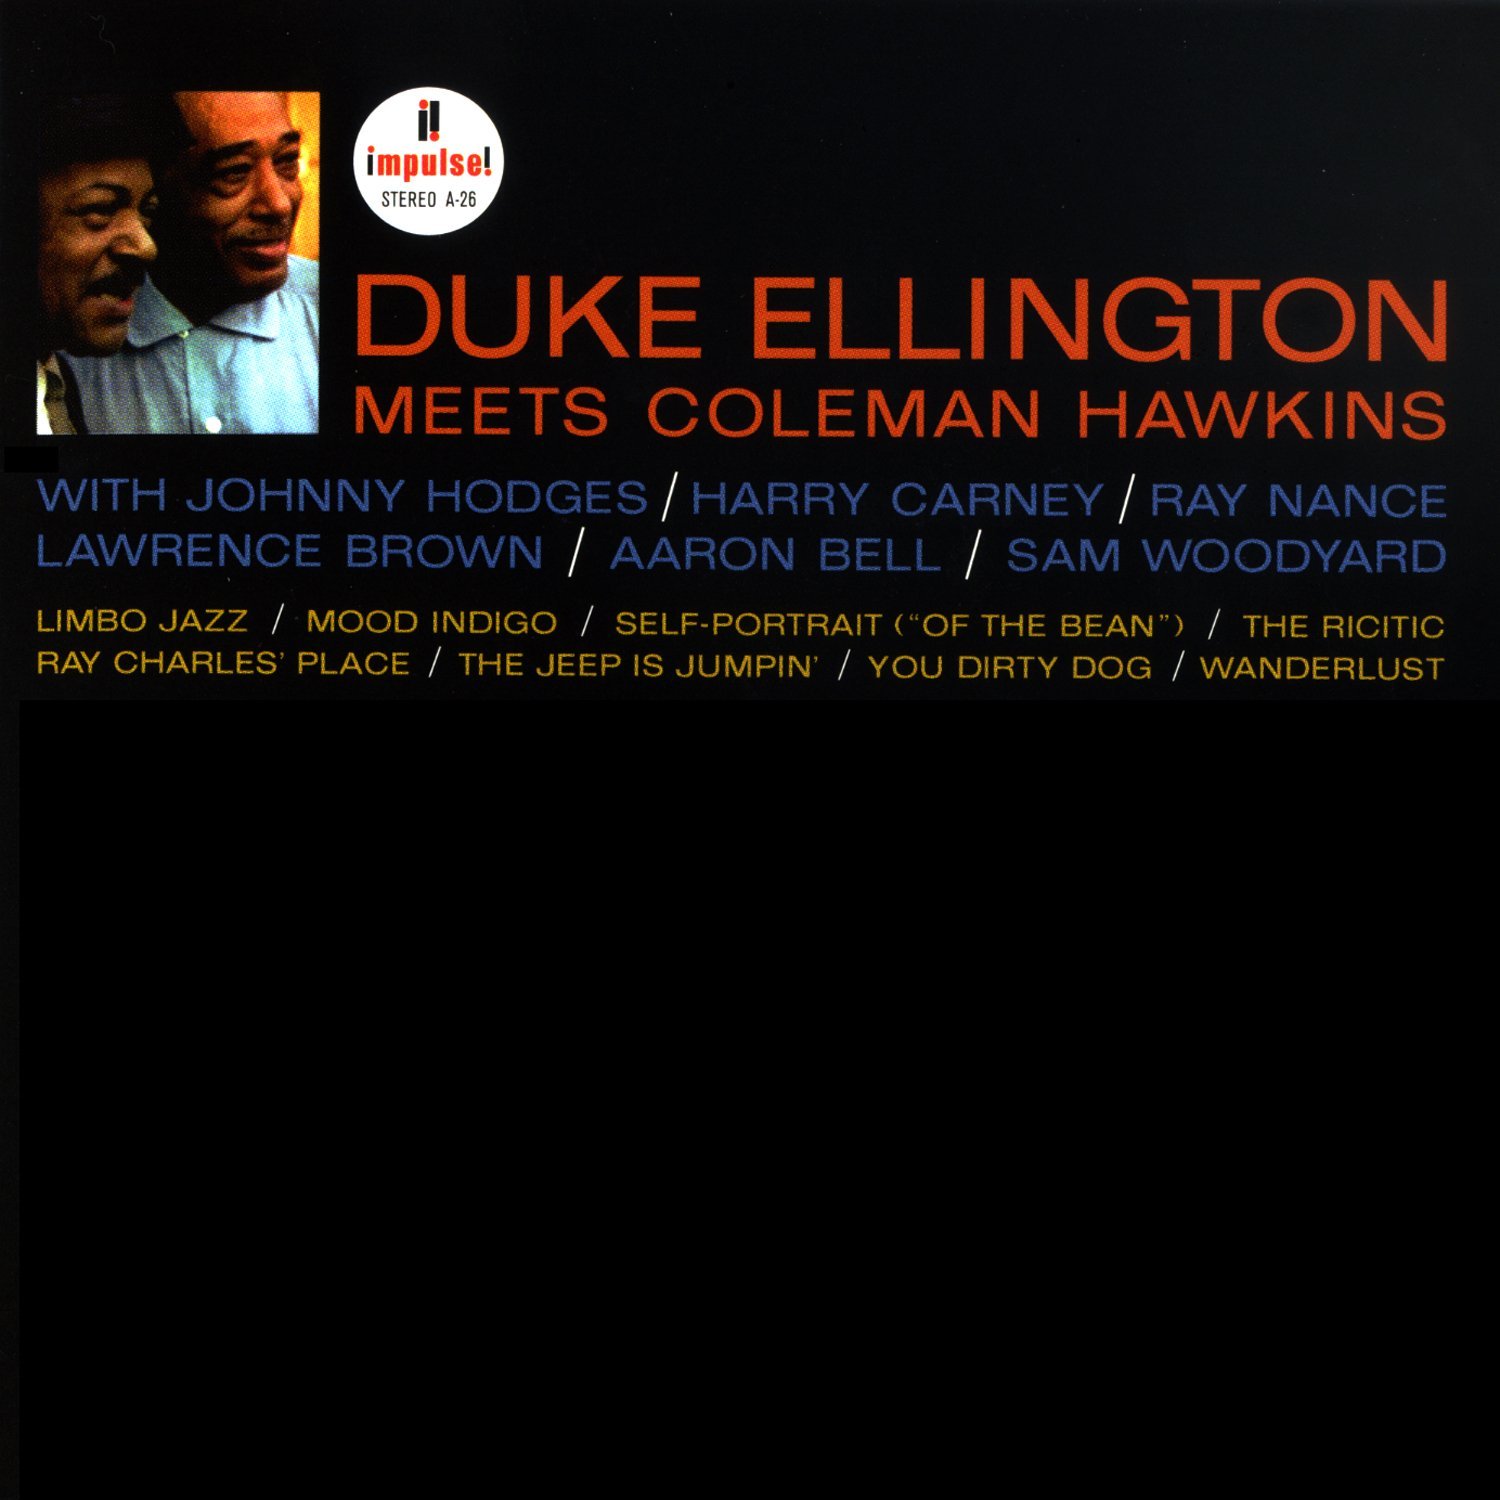 Duke Ellington And Coleman Hawkins - Duke Ellington Meets Coleman Hawkins (1963) [APO 2010] {SACD ISO + FLAC 24bit/88,2kHz}